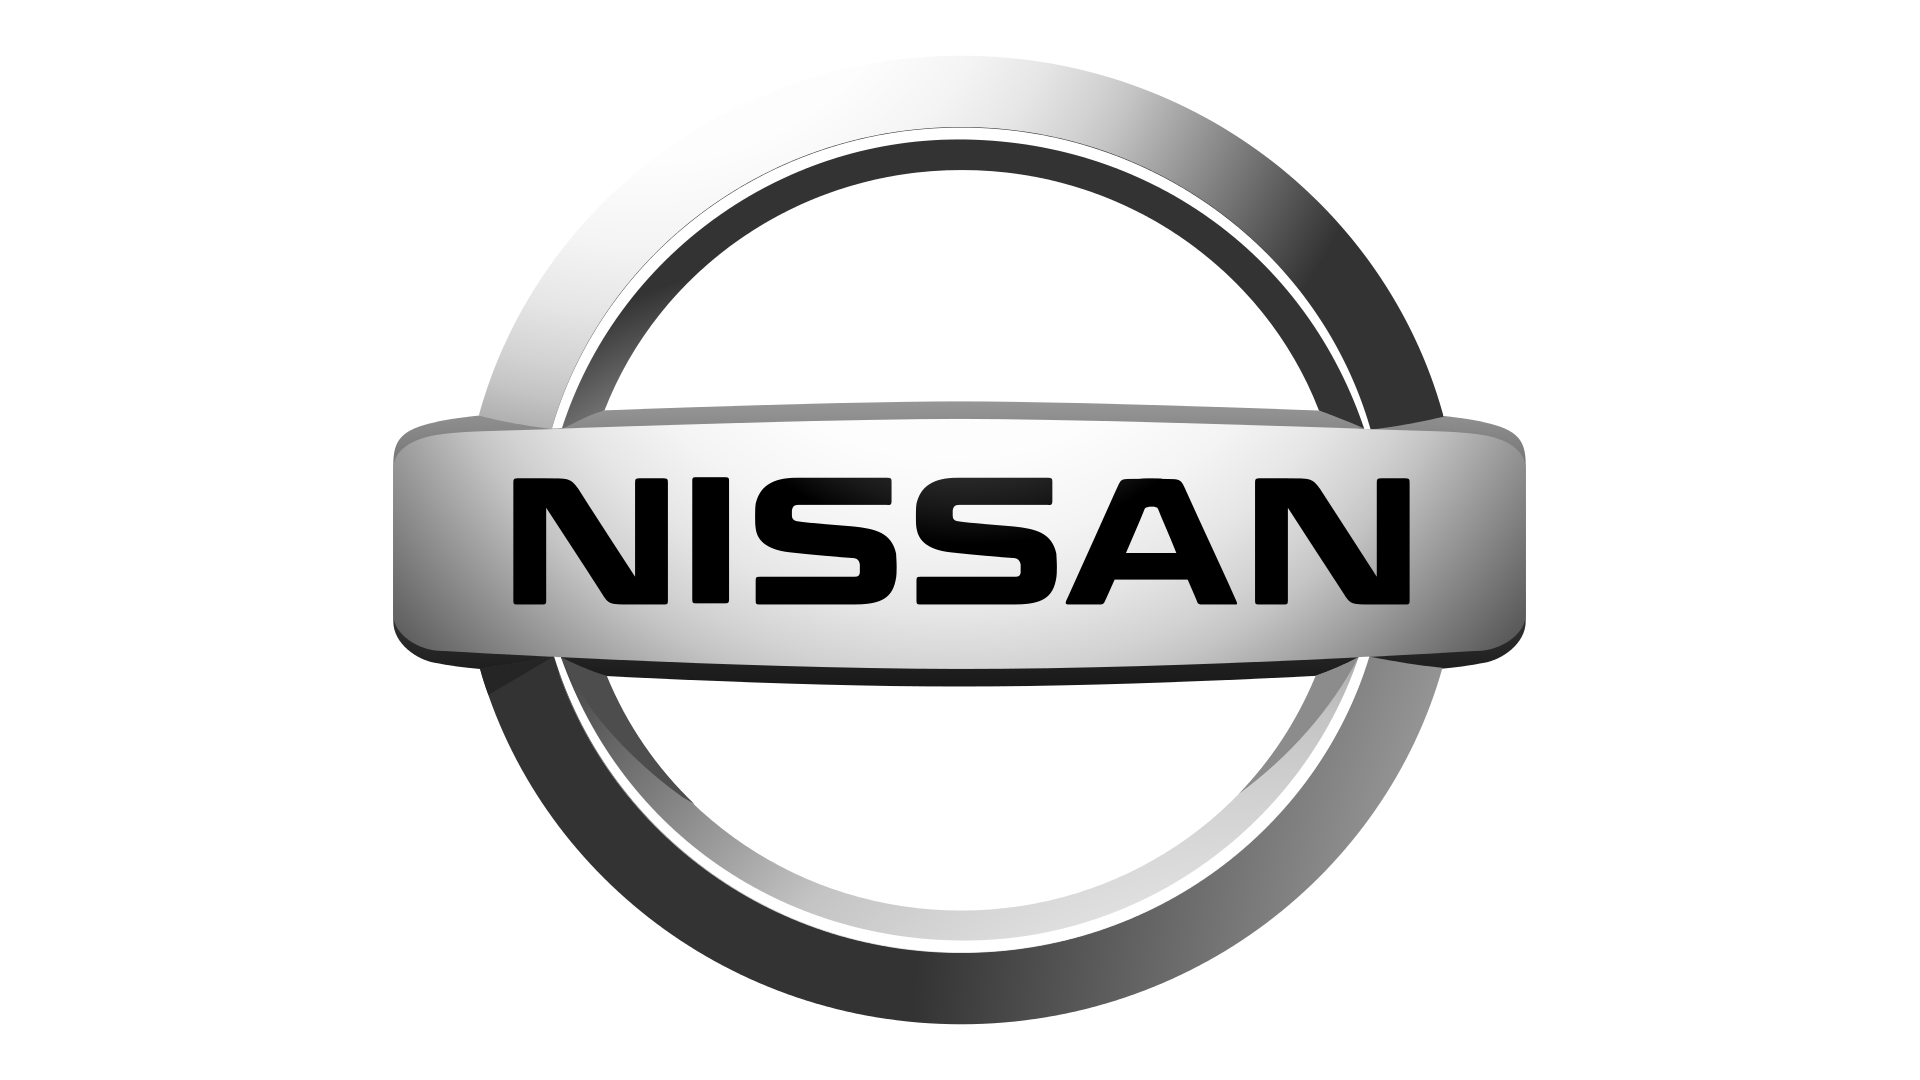 Nissan-symbol-2012-1920x1080.png